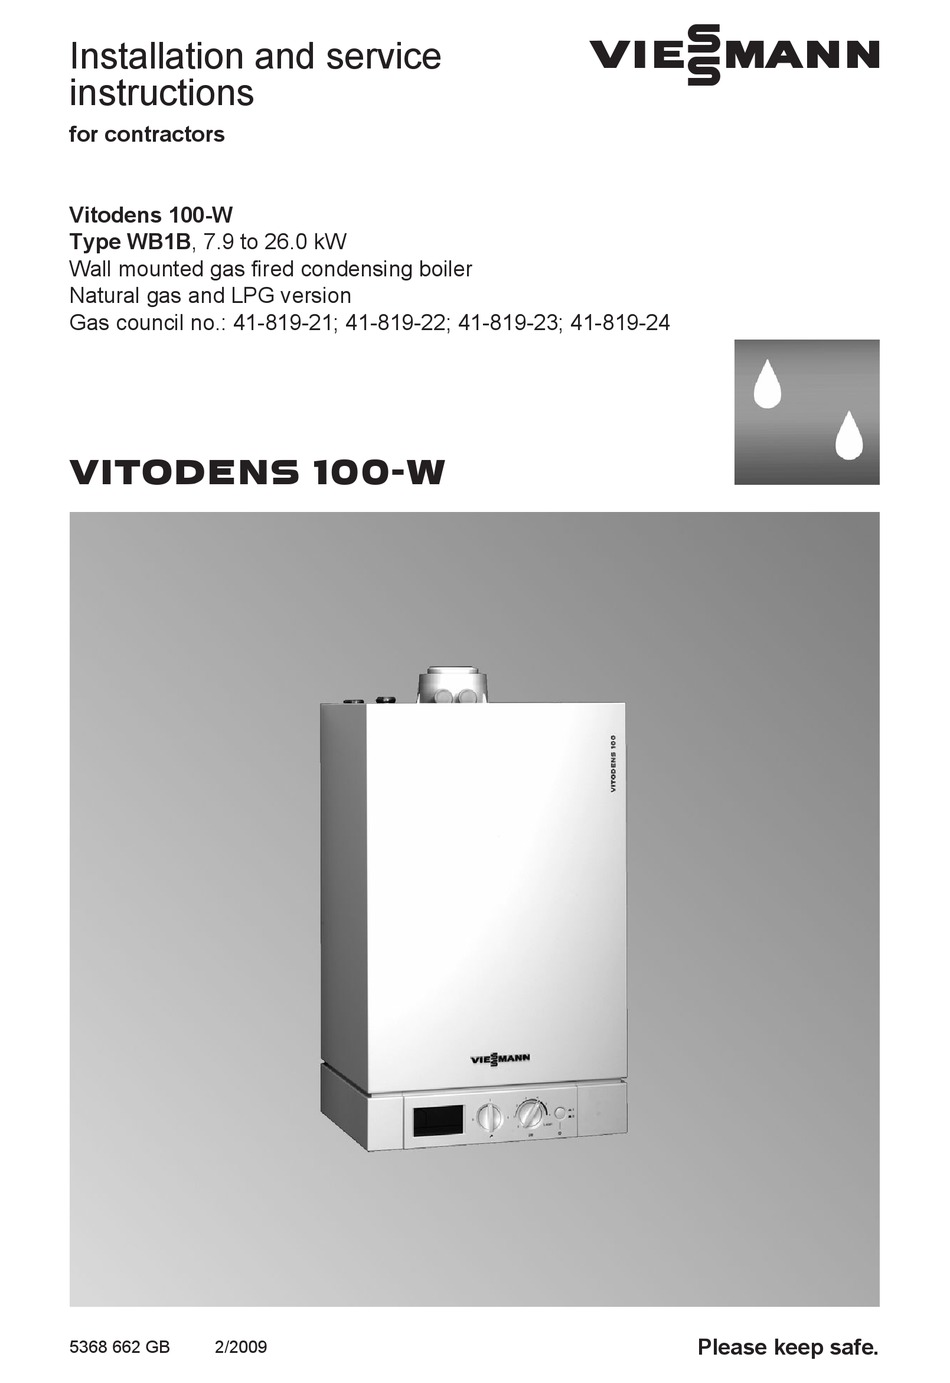 Viessmann Vitodens 100 wb1 manual